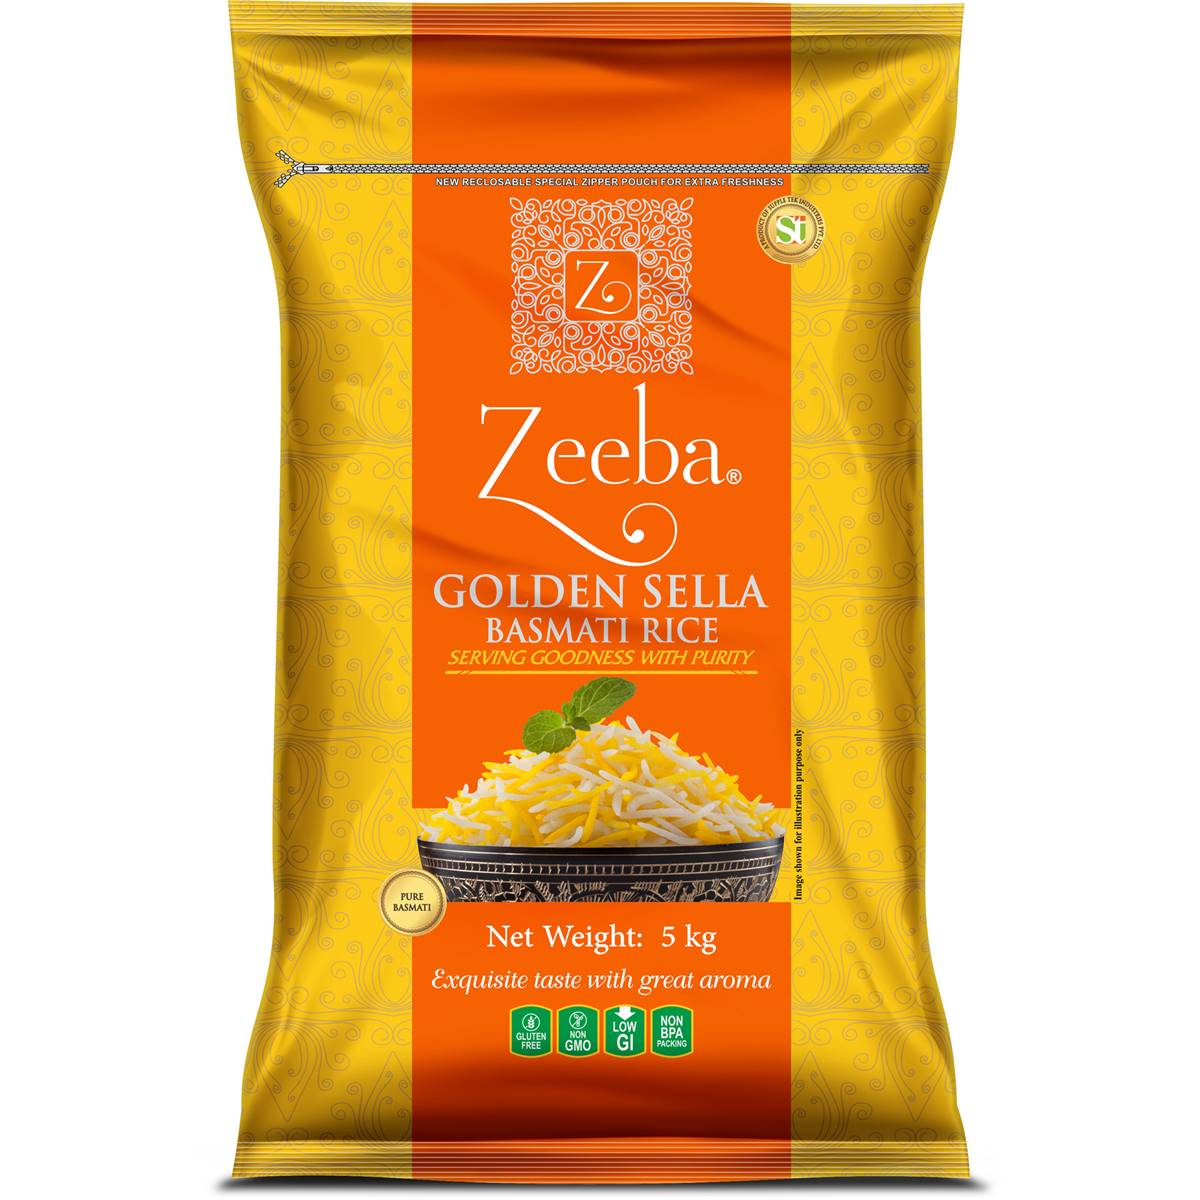 Calories in Zeeba Golden Sella Basmati Rice